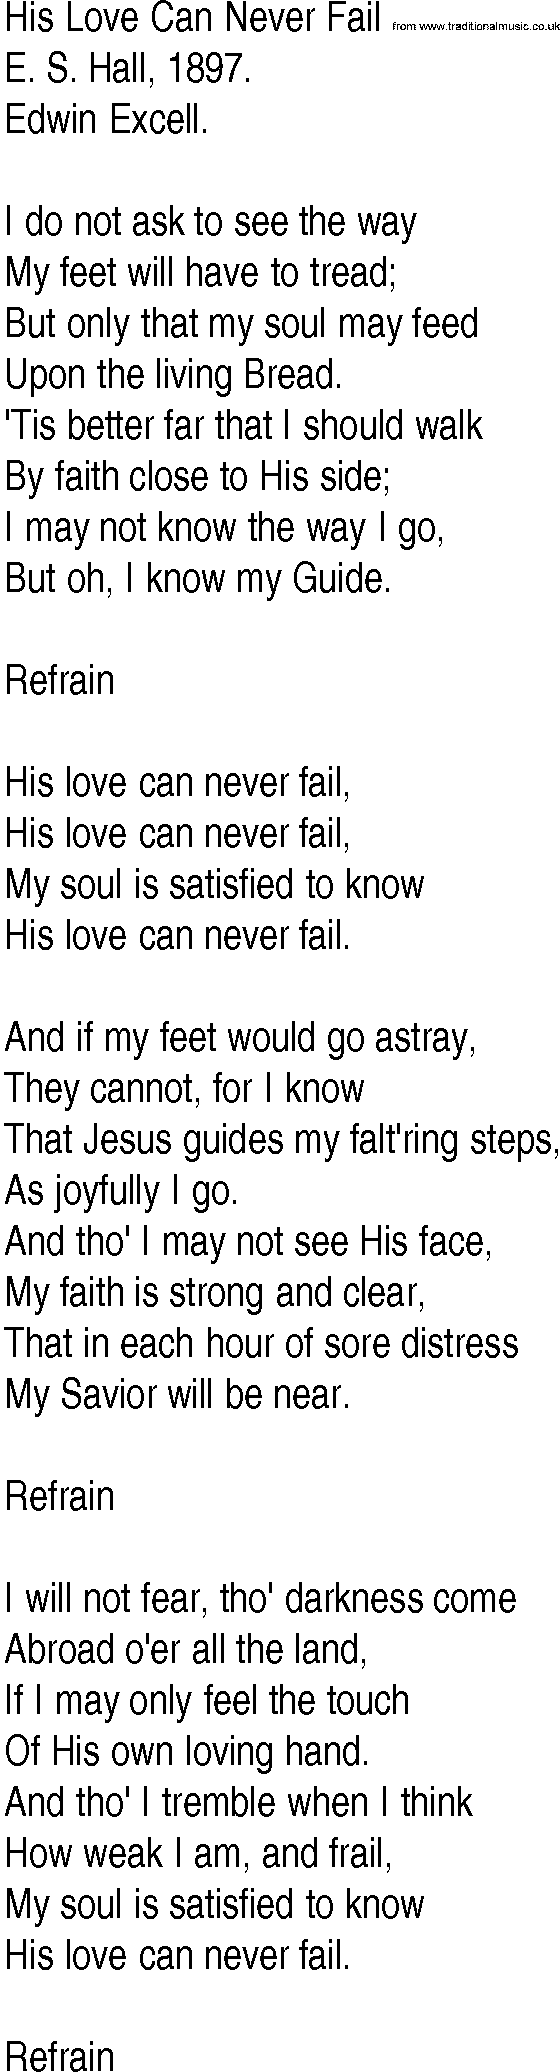 Hymn and Gospel Song: His Love Can Never Fail by E S Hall lyrics